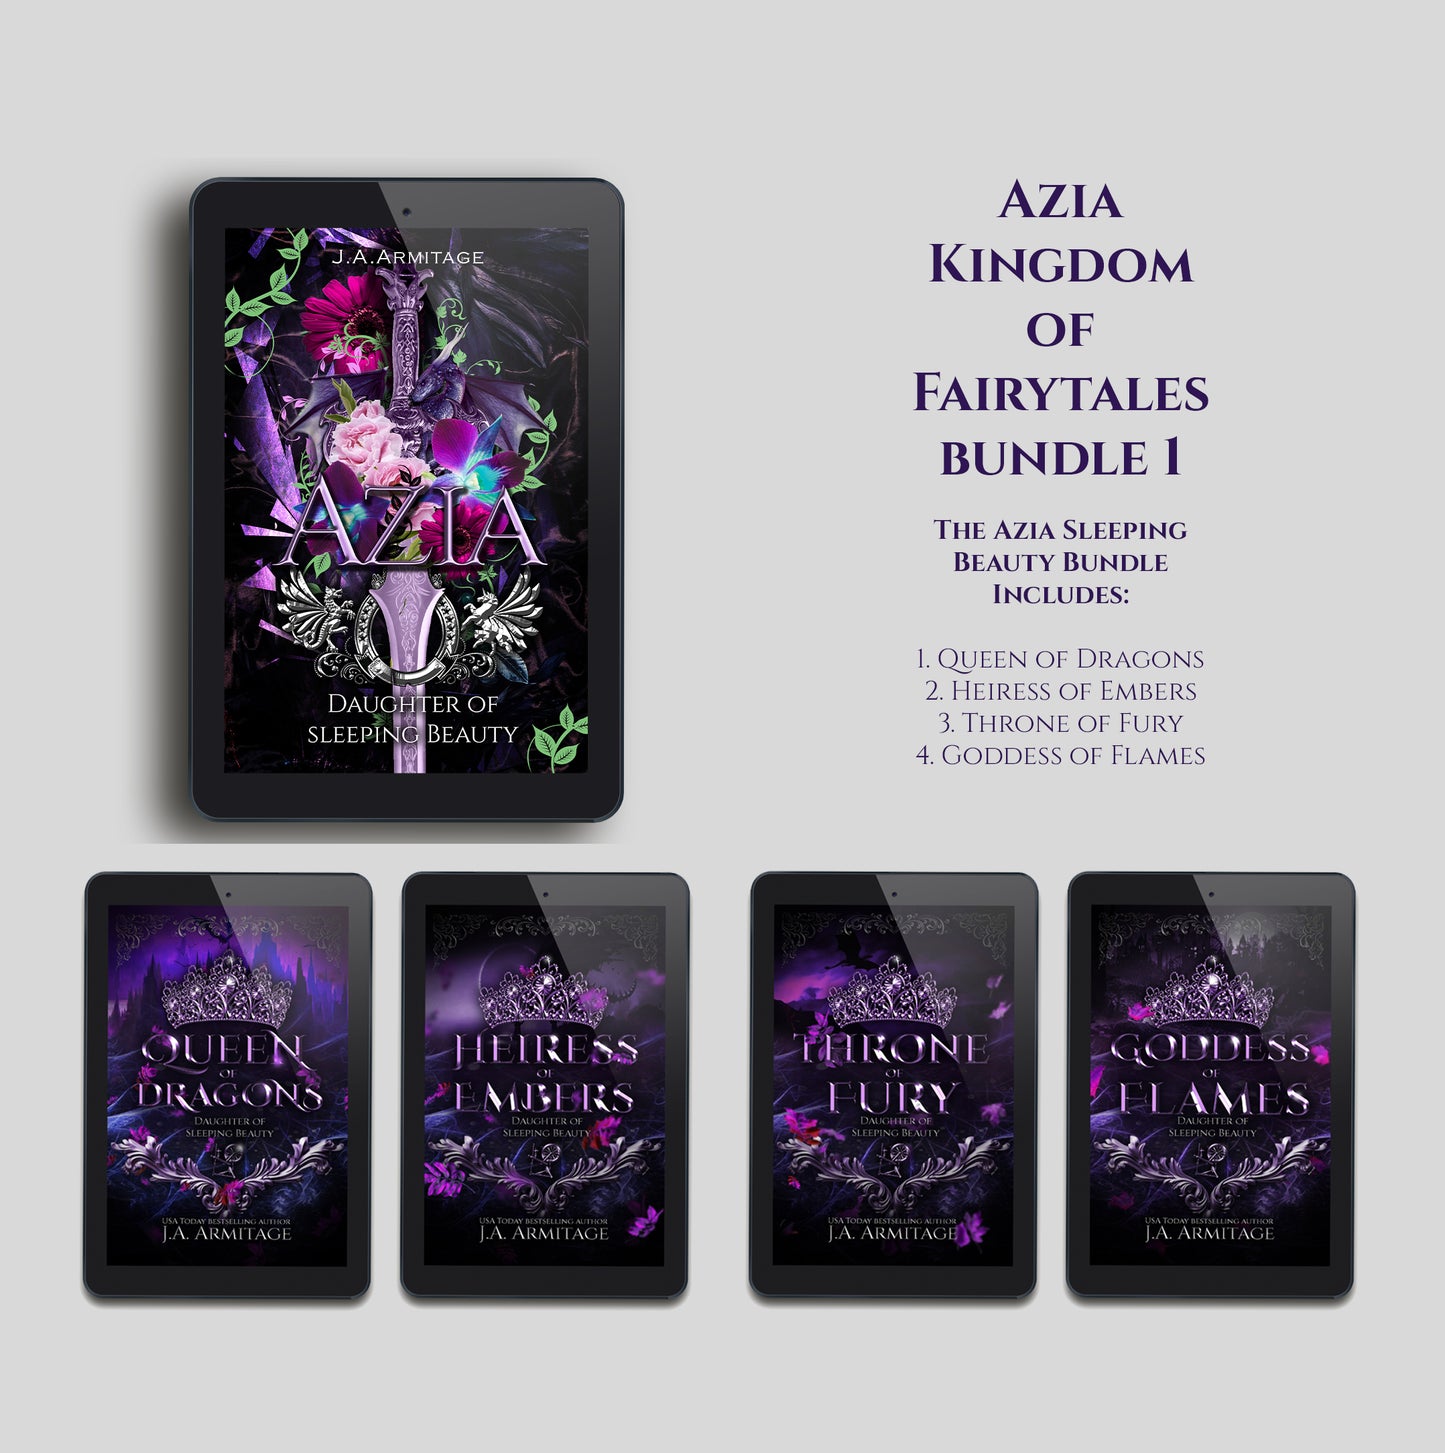 AZIA (Daughter of Sleeping Beauty) eBOOK BUNDLE